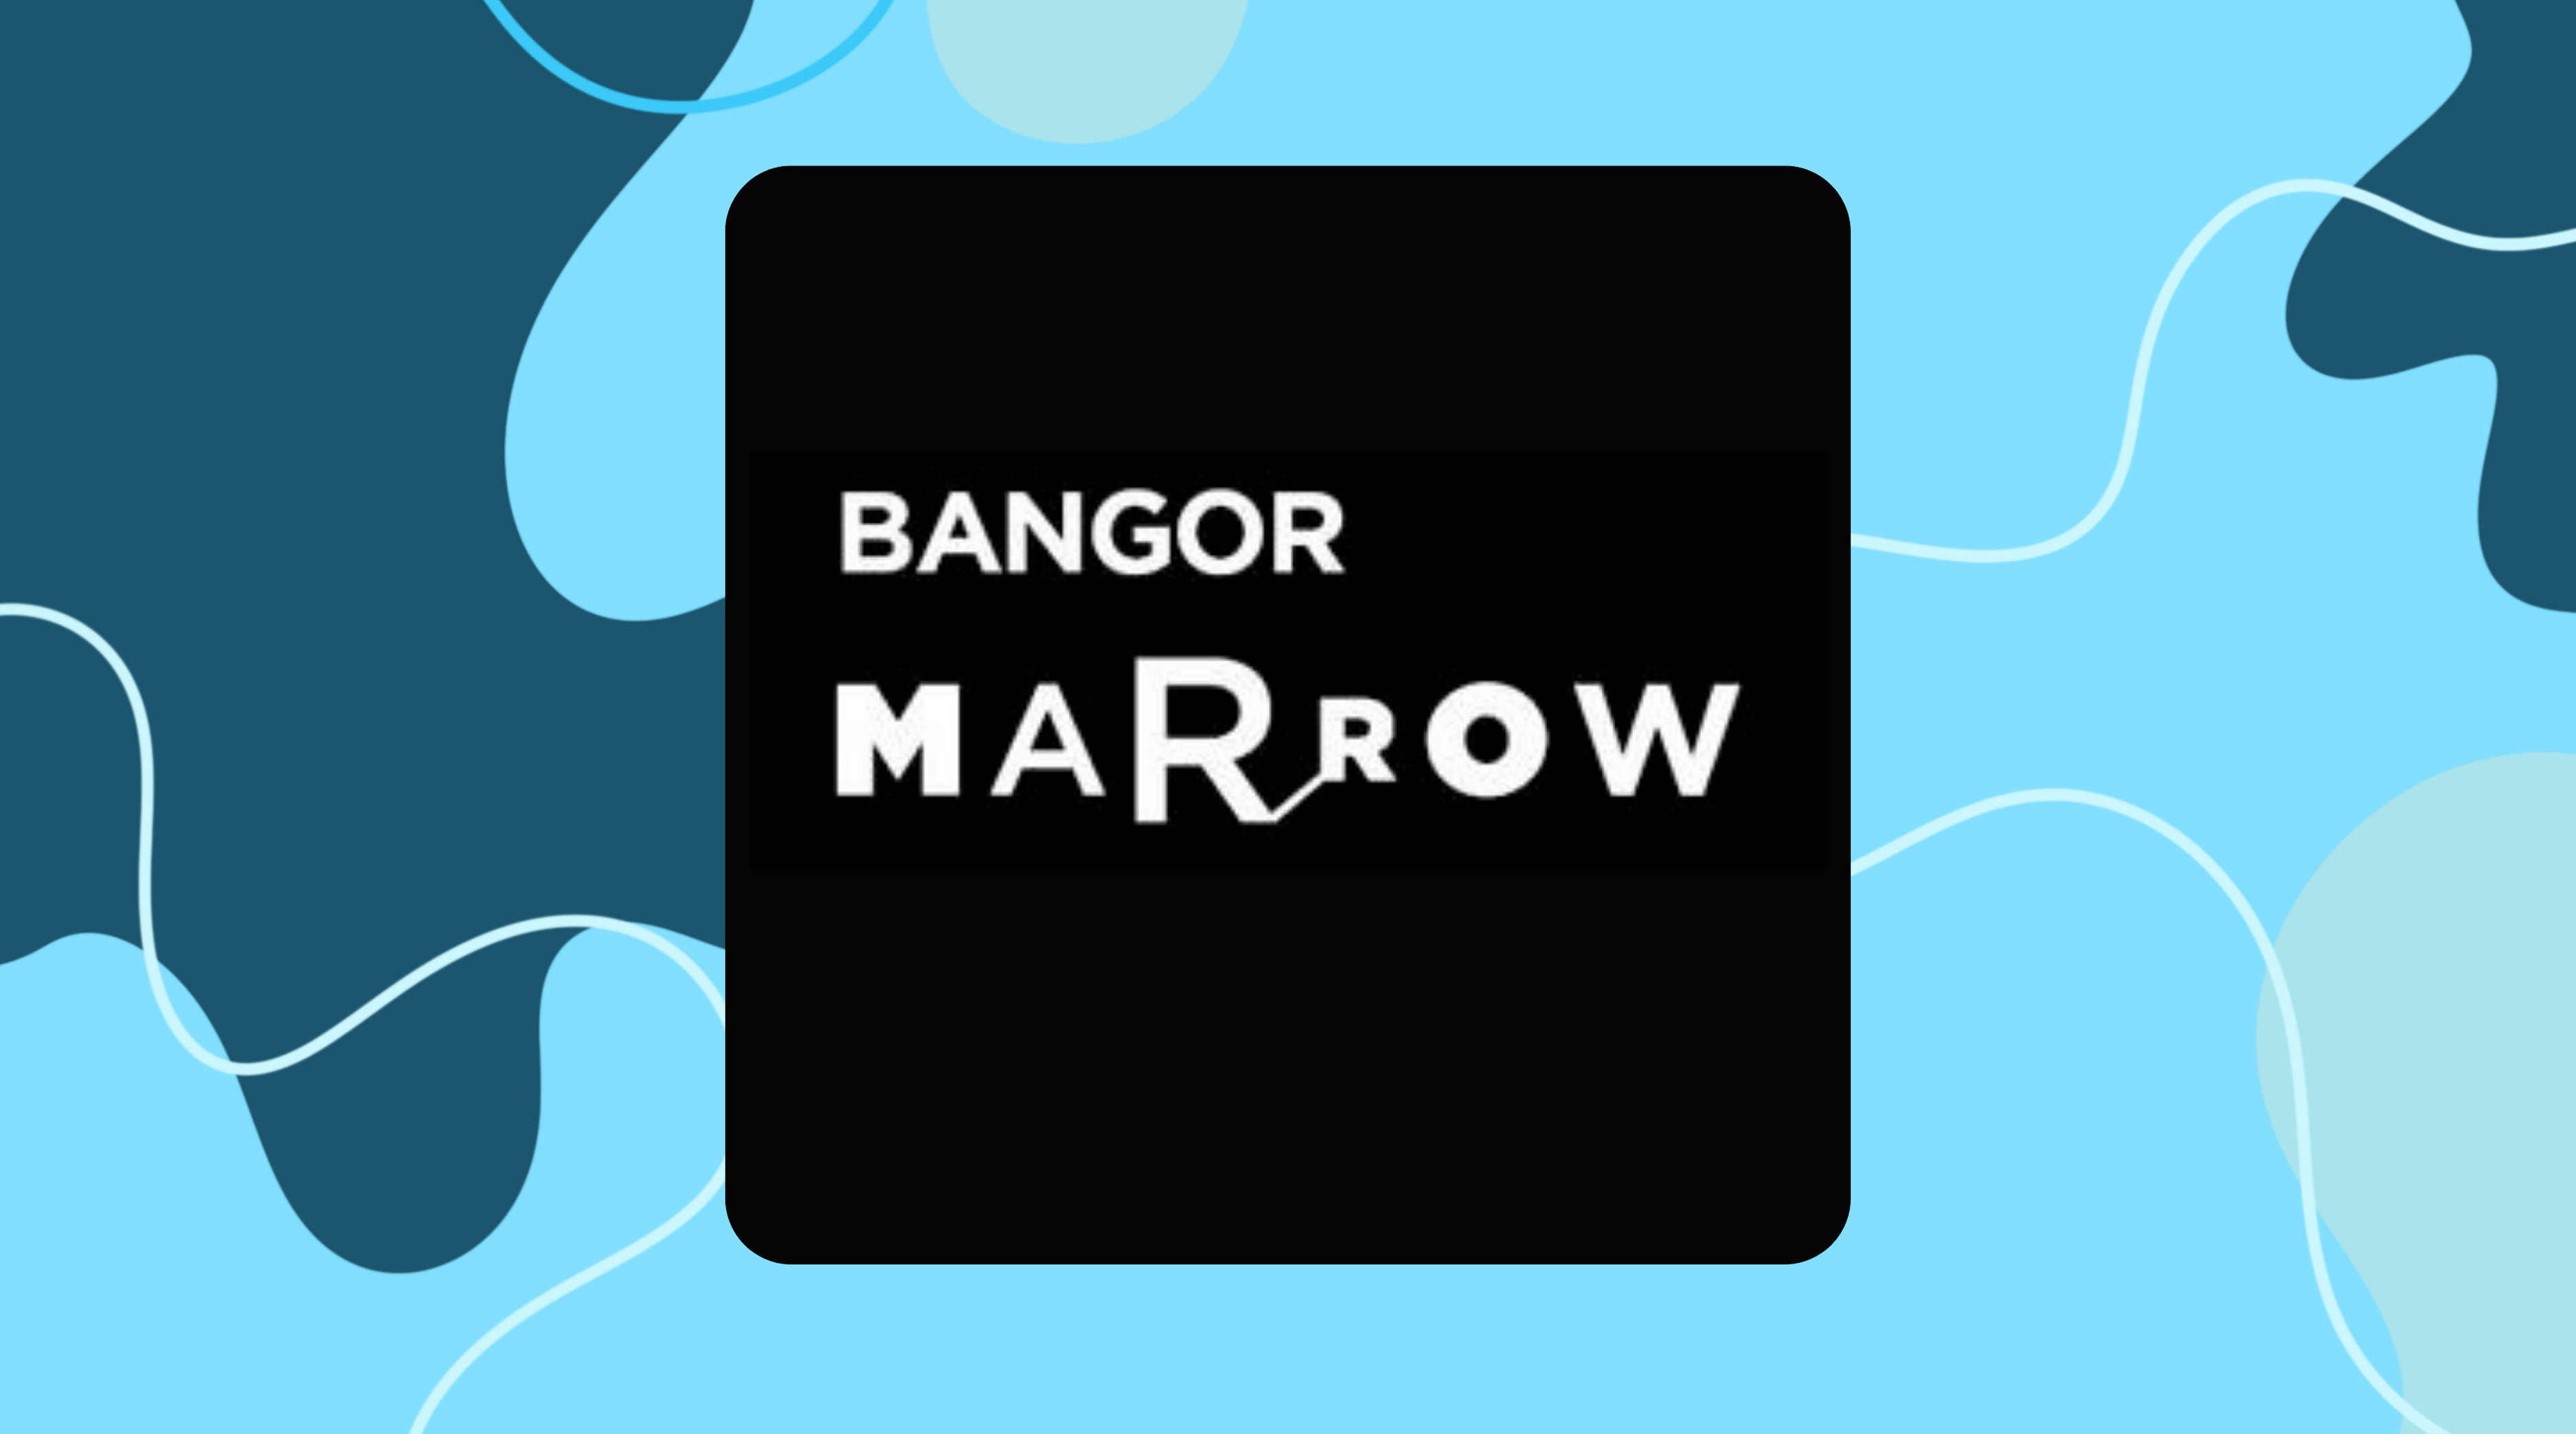 Banner for Bangor Marrow